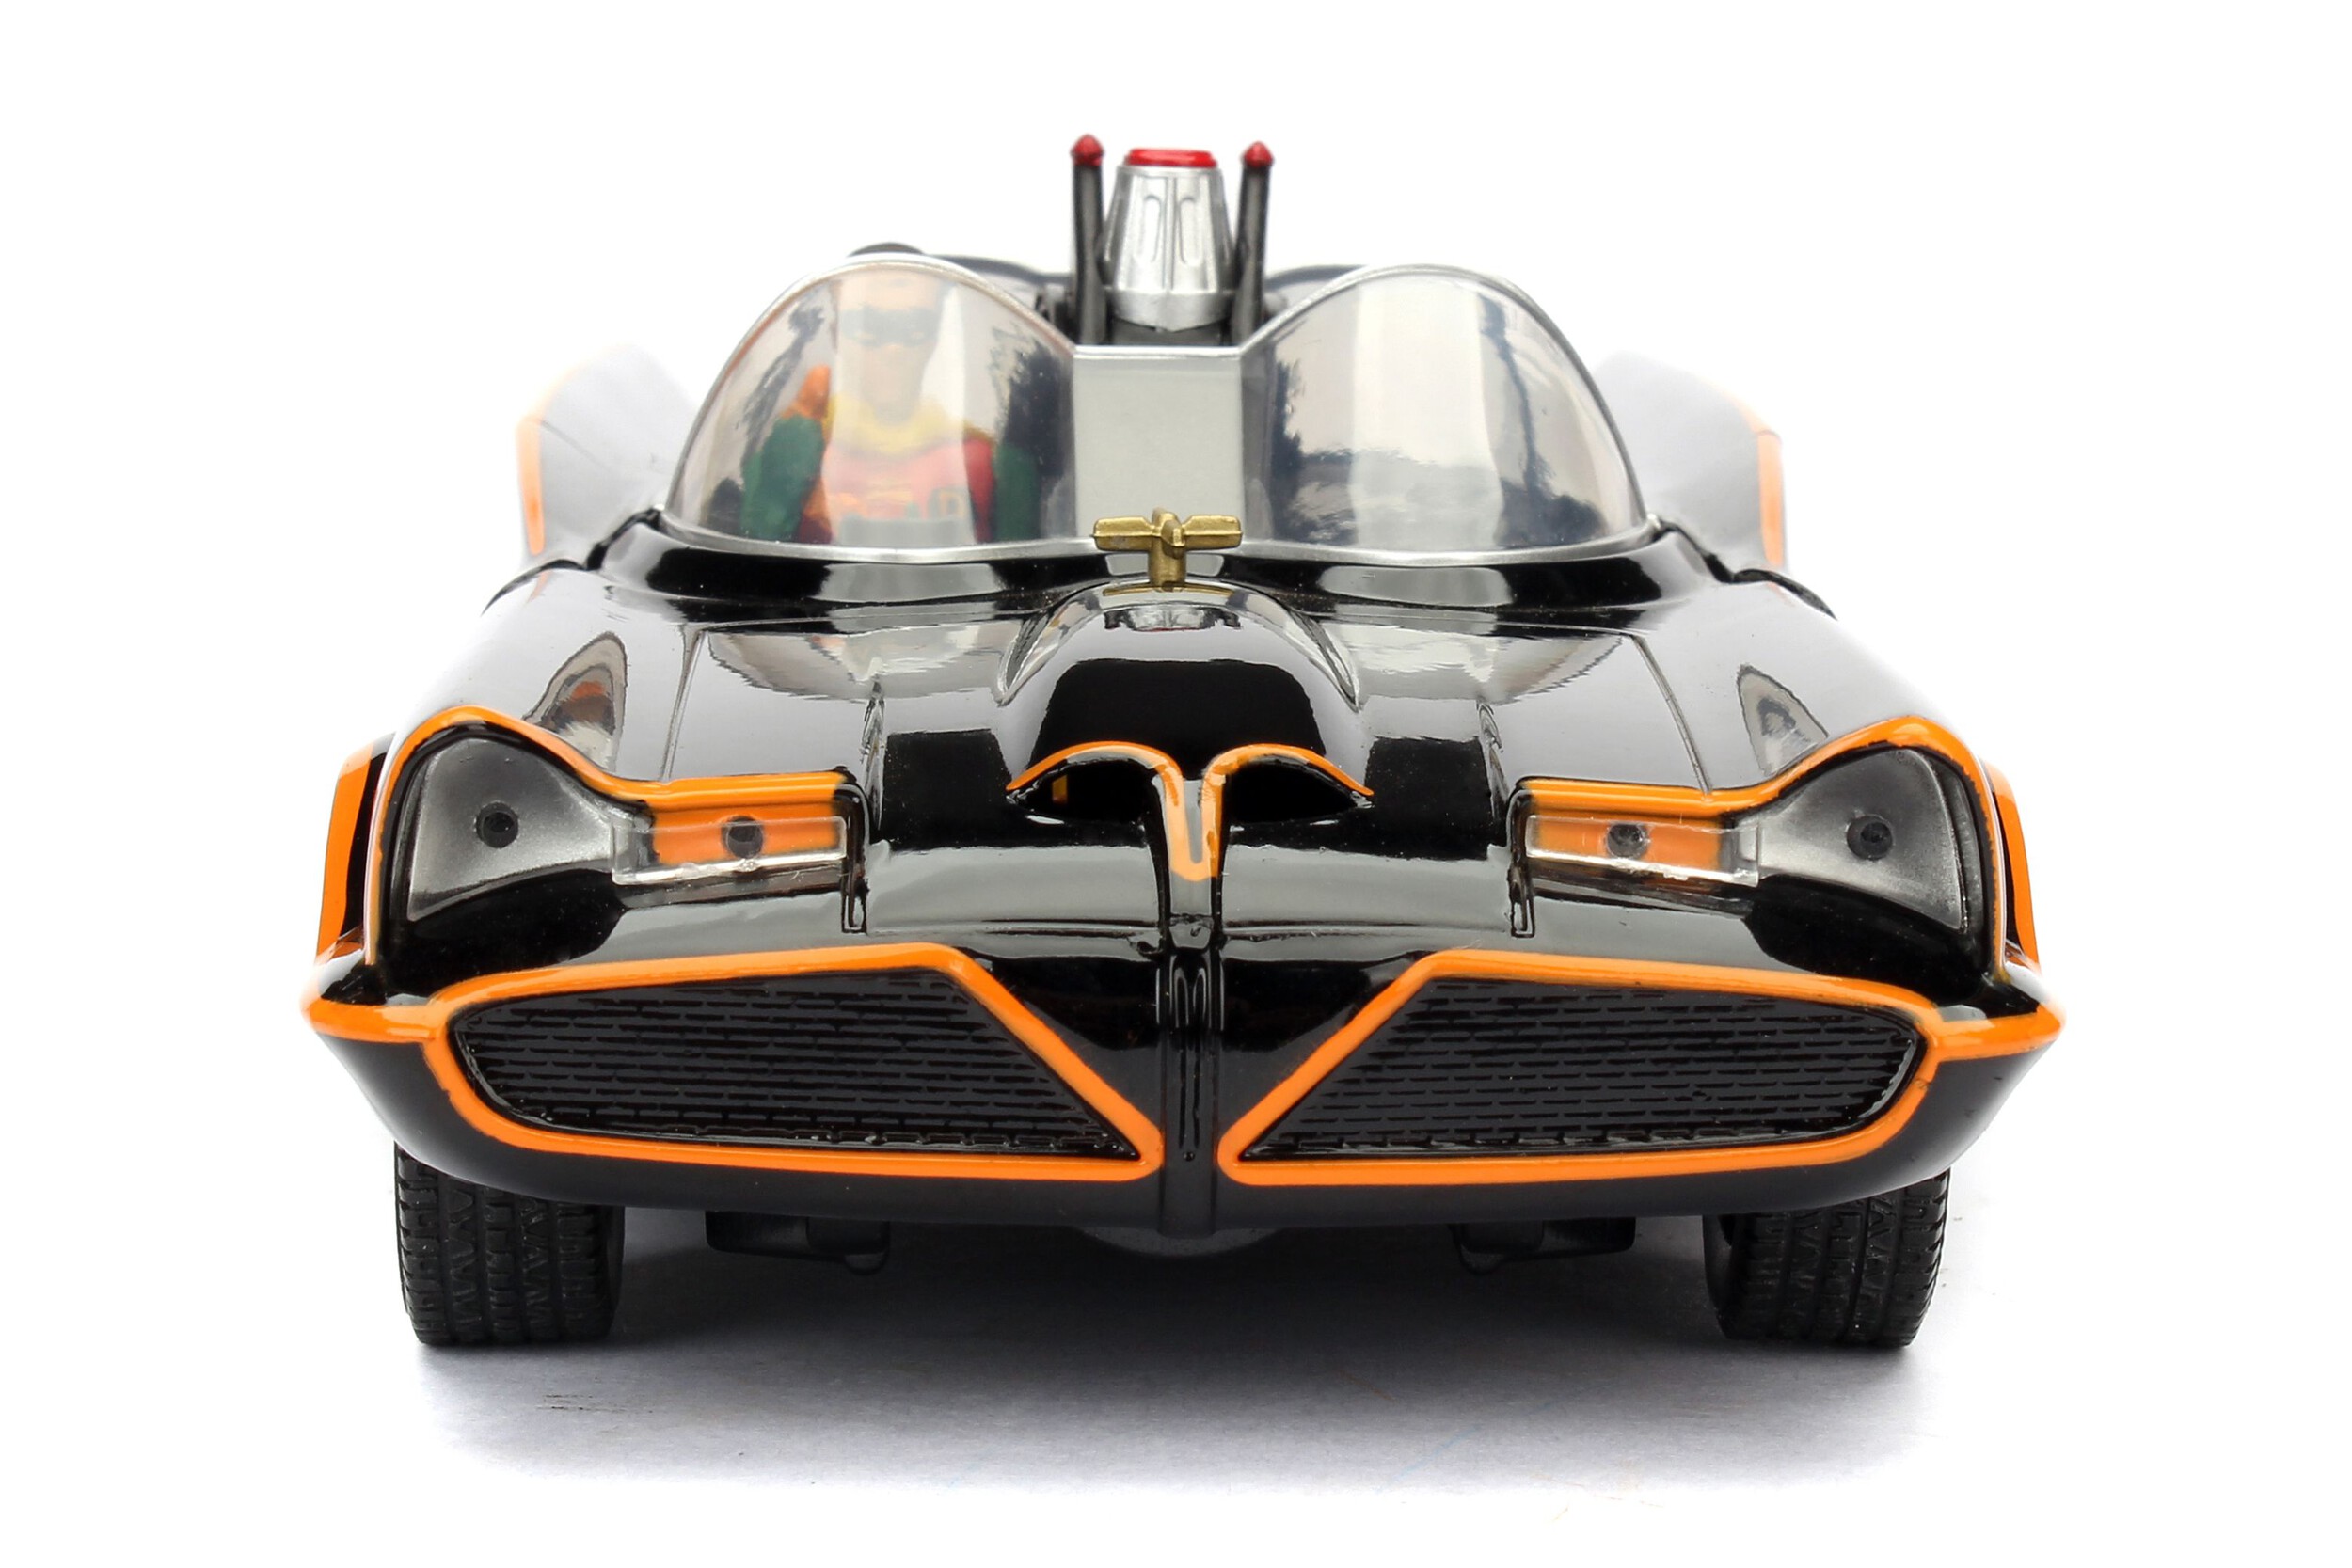 JADA TOYS- Batmobile Trumble Camo Batman Voiture Miniature de